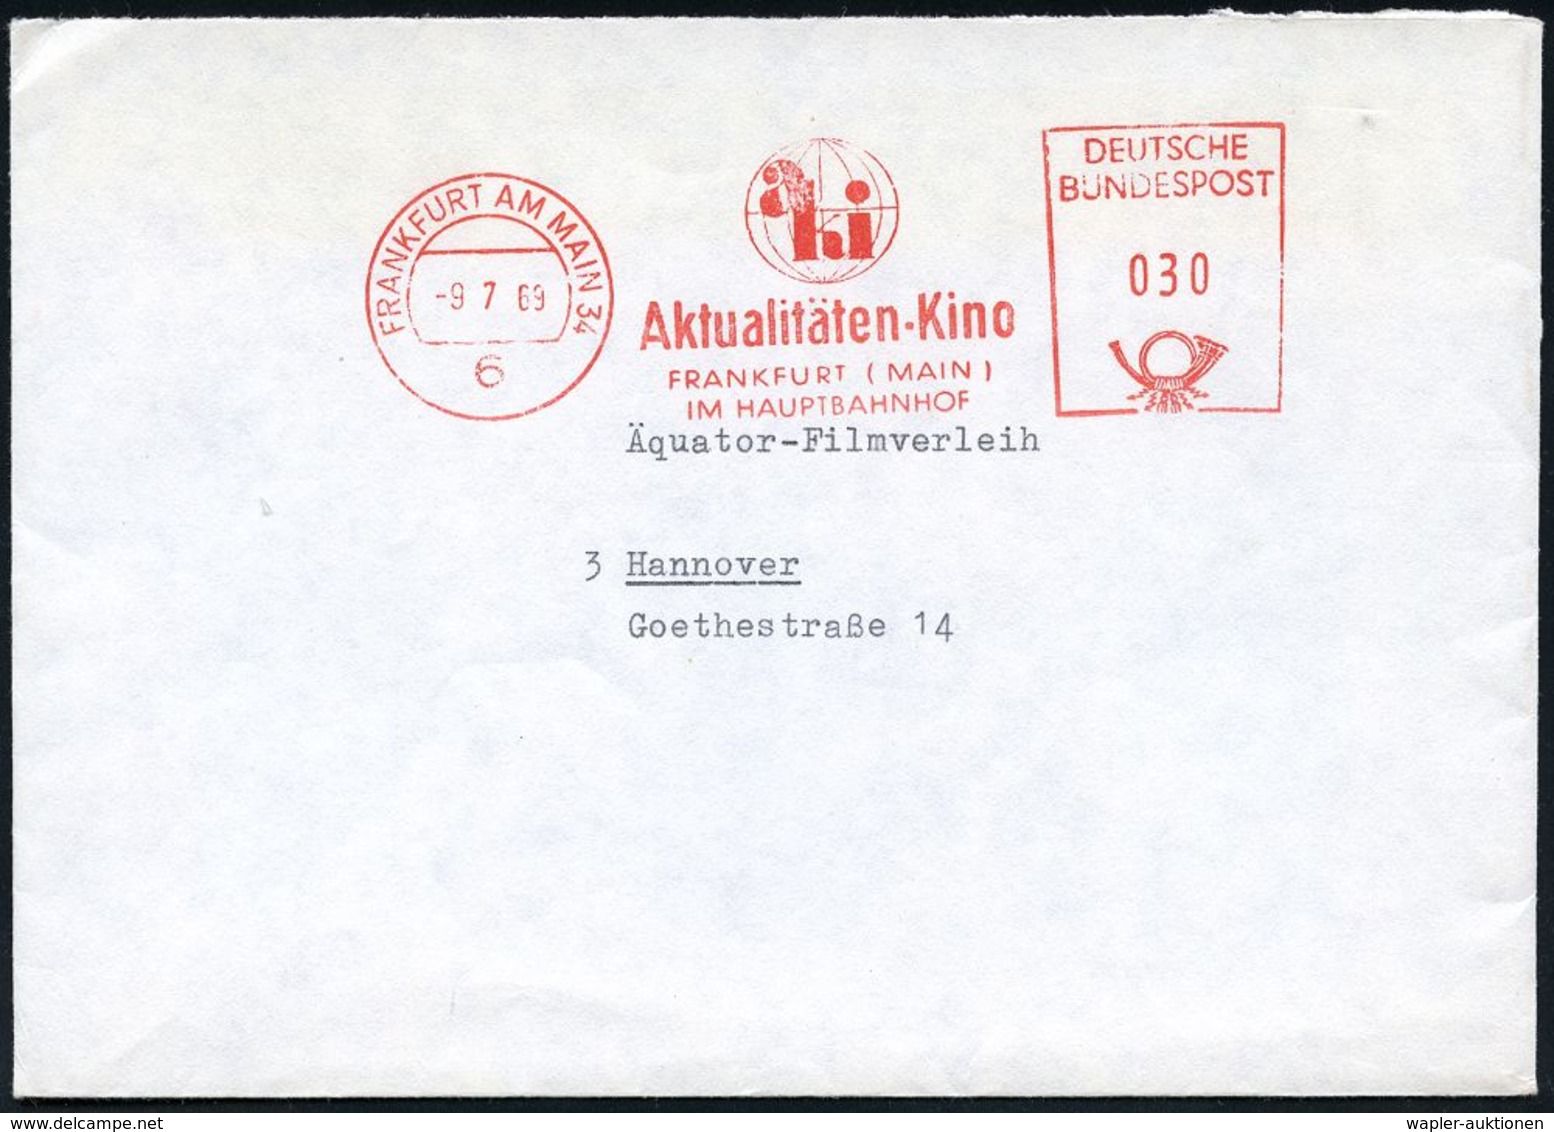 FILM / FILMVERLEIH / FILMTITEL / KINO : 6 FRANKFURT AM MAIN 34/ Aki/ Aktualitäten-Kino/ ..IM HAUPTBAHNHOF 1969 (9.7.) AF - Cinéma